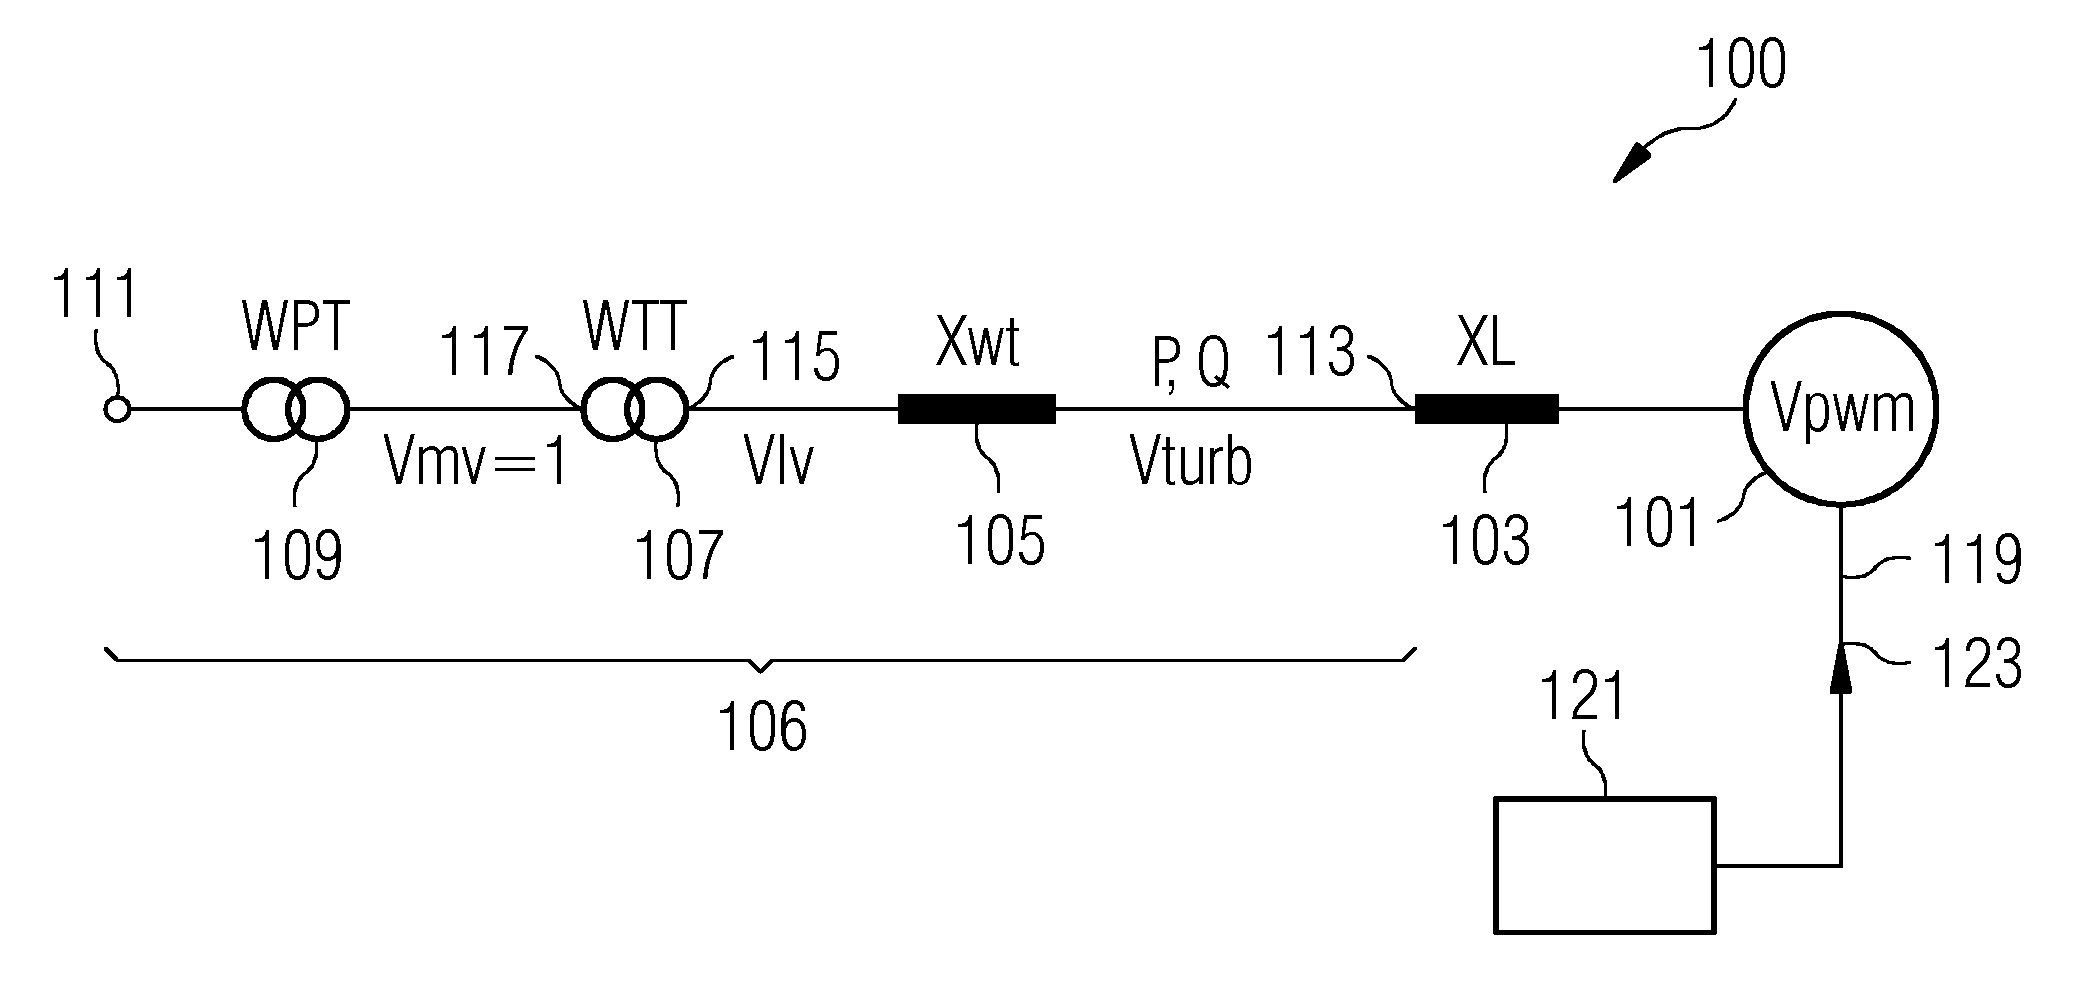 Method for determining a voltage bounding range